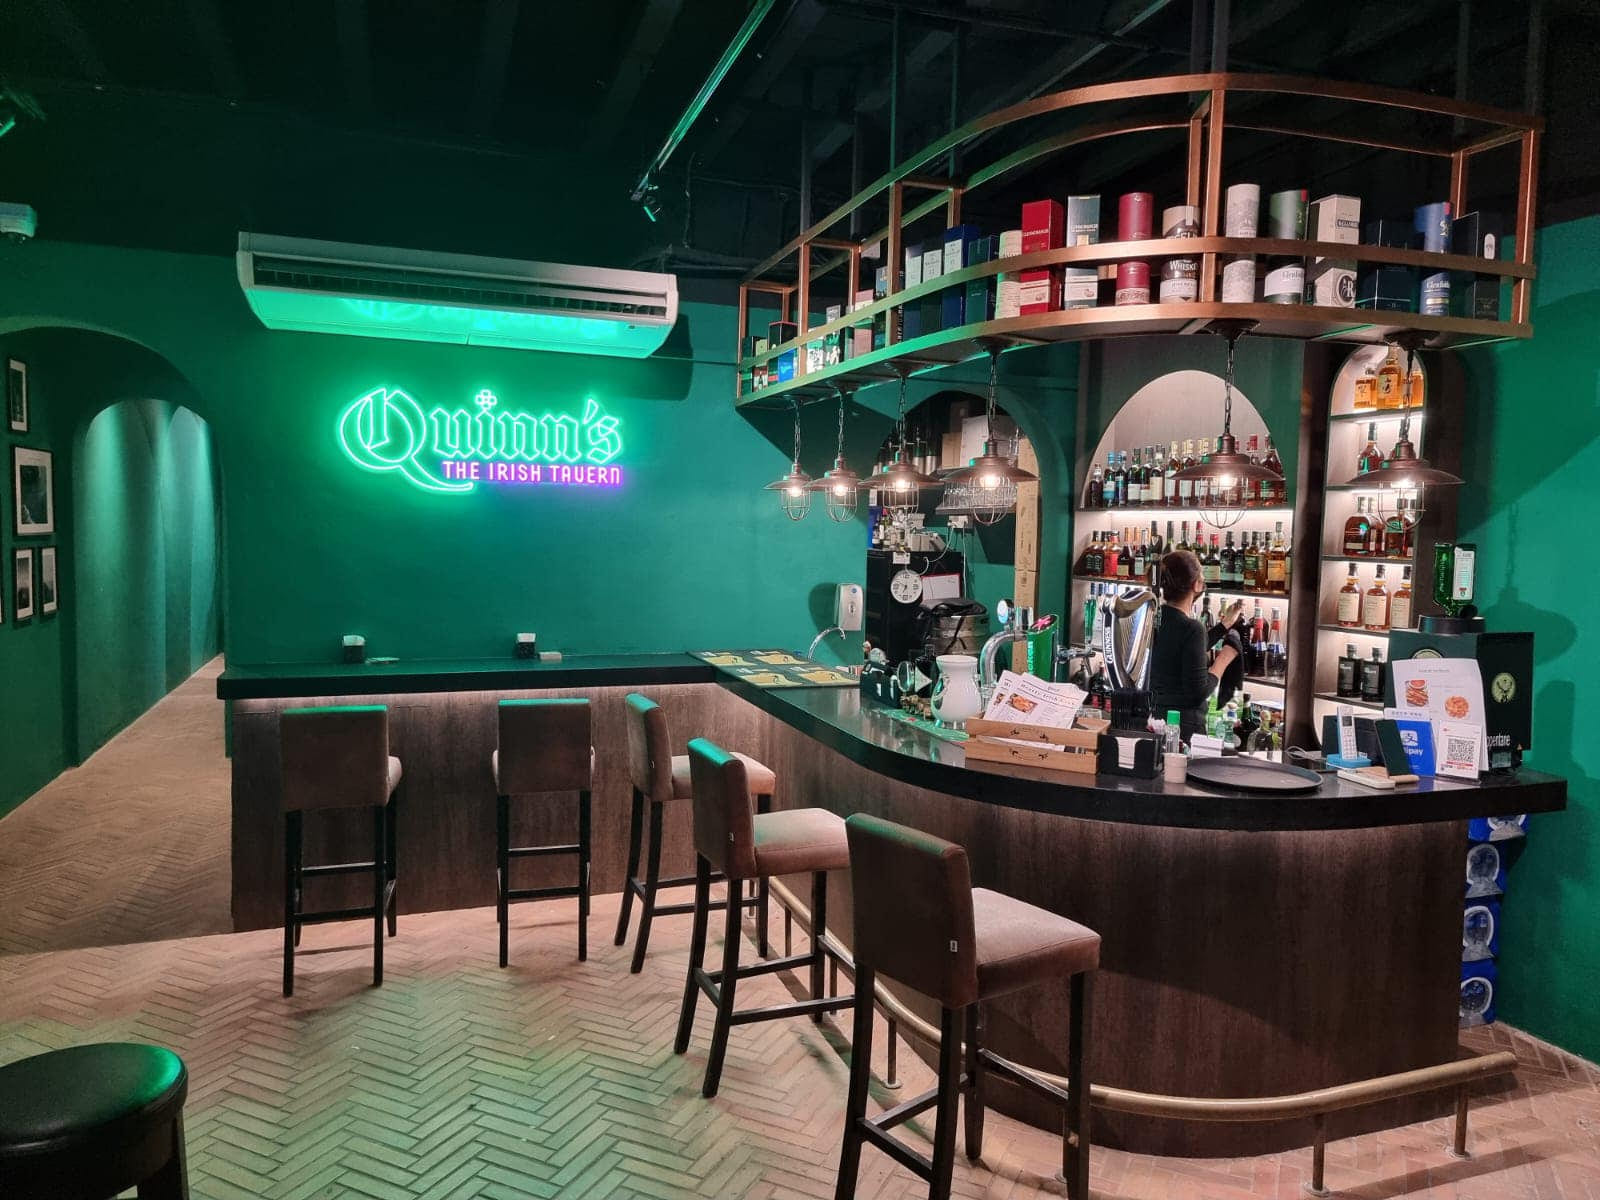 Quinn's The Irish Tavern in Singapore